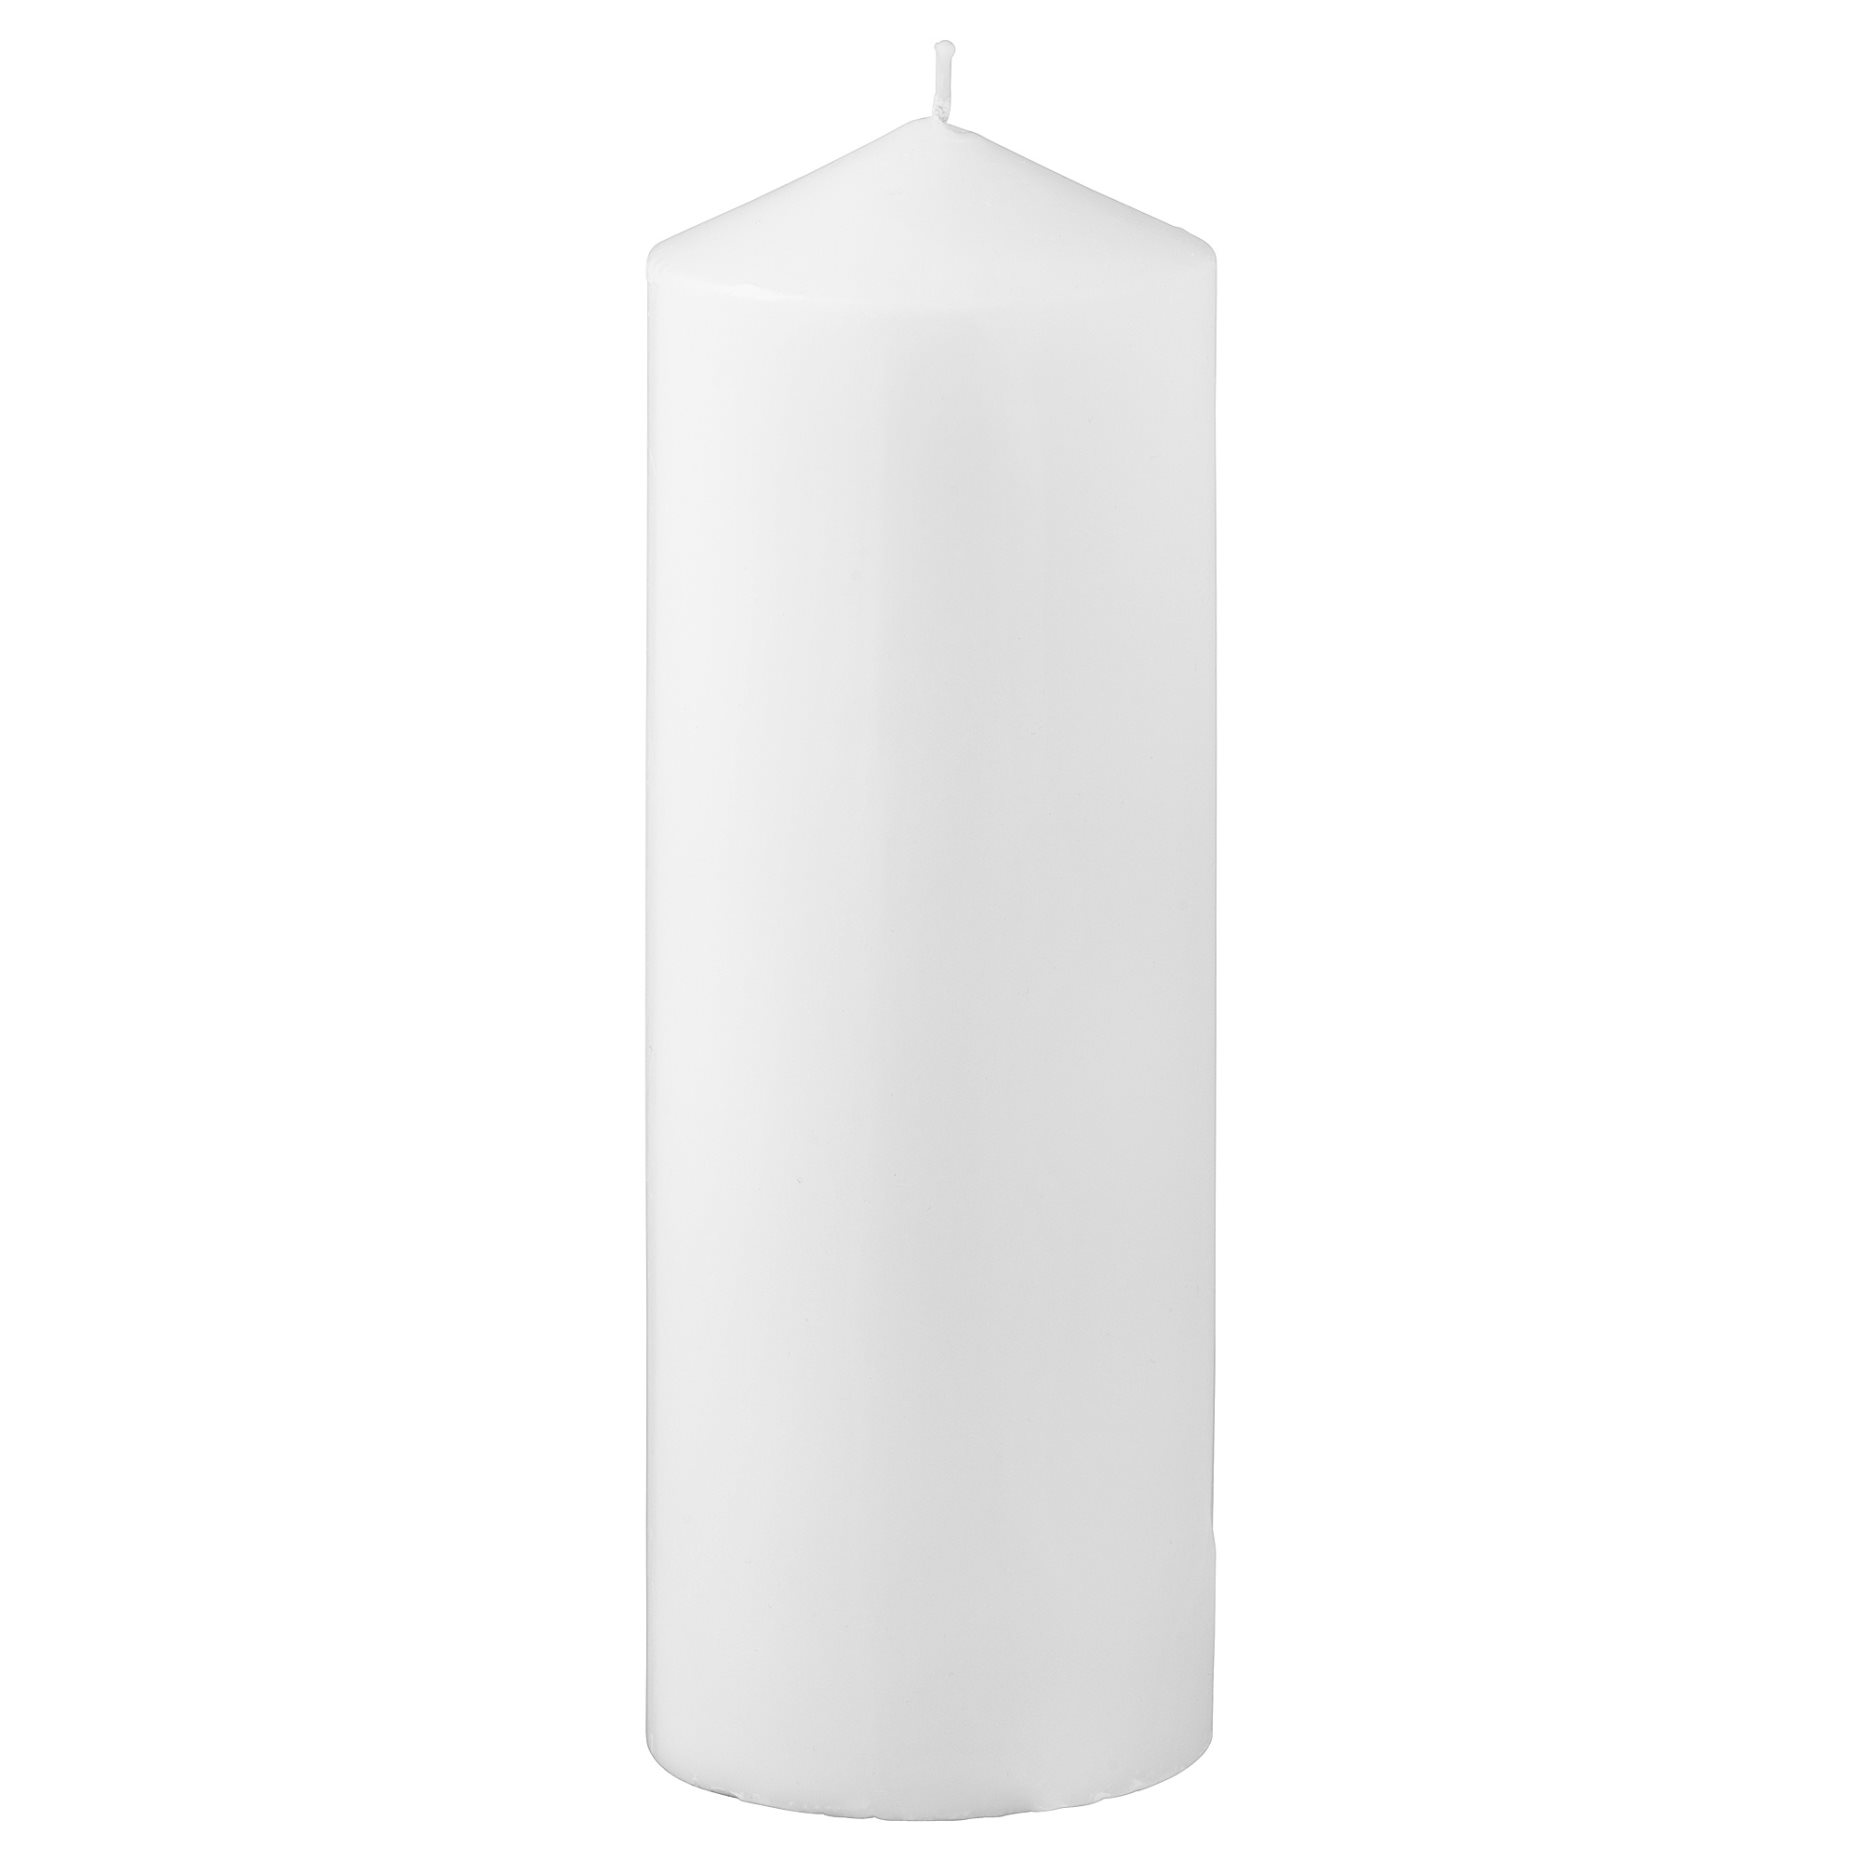 FENOMEN, unscented block candle, 701.193.45